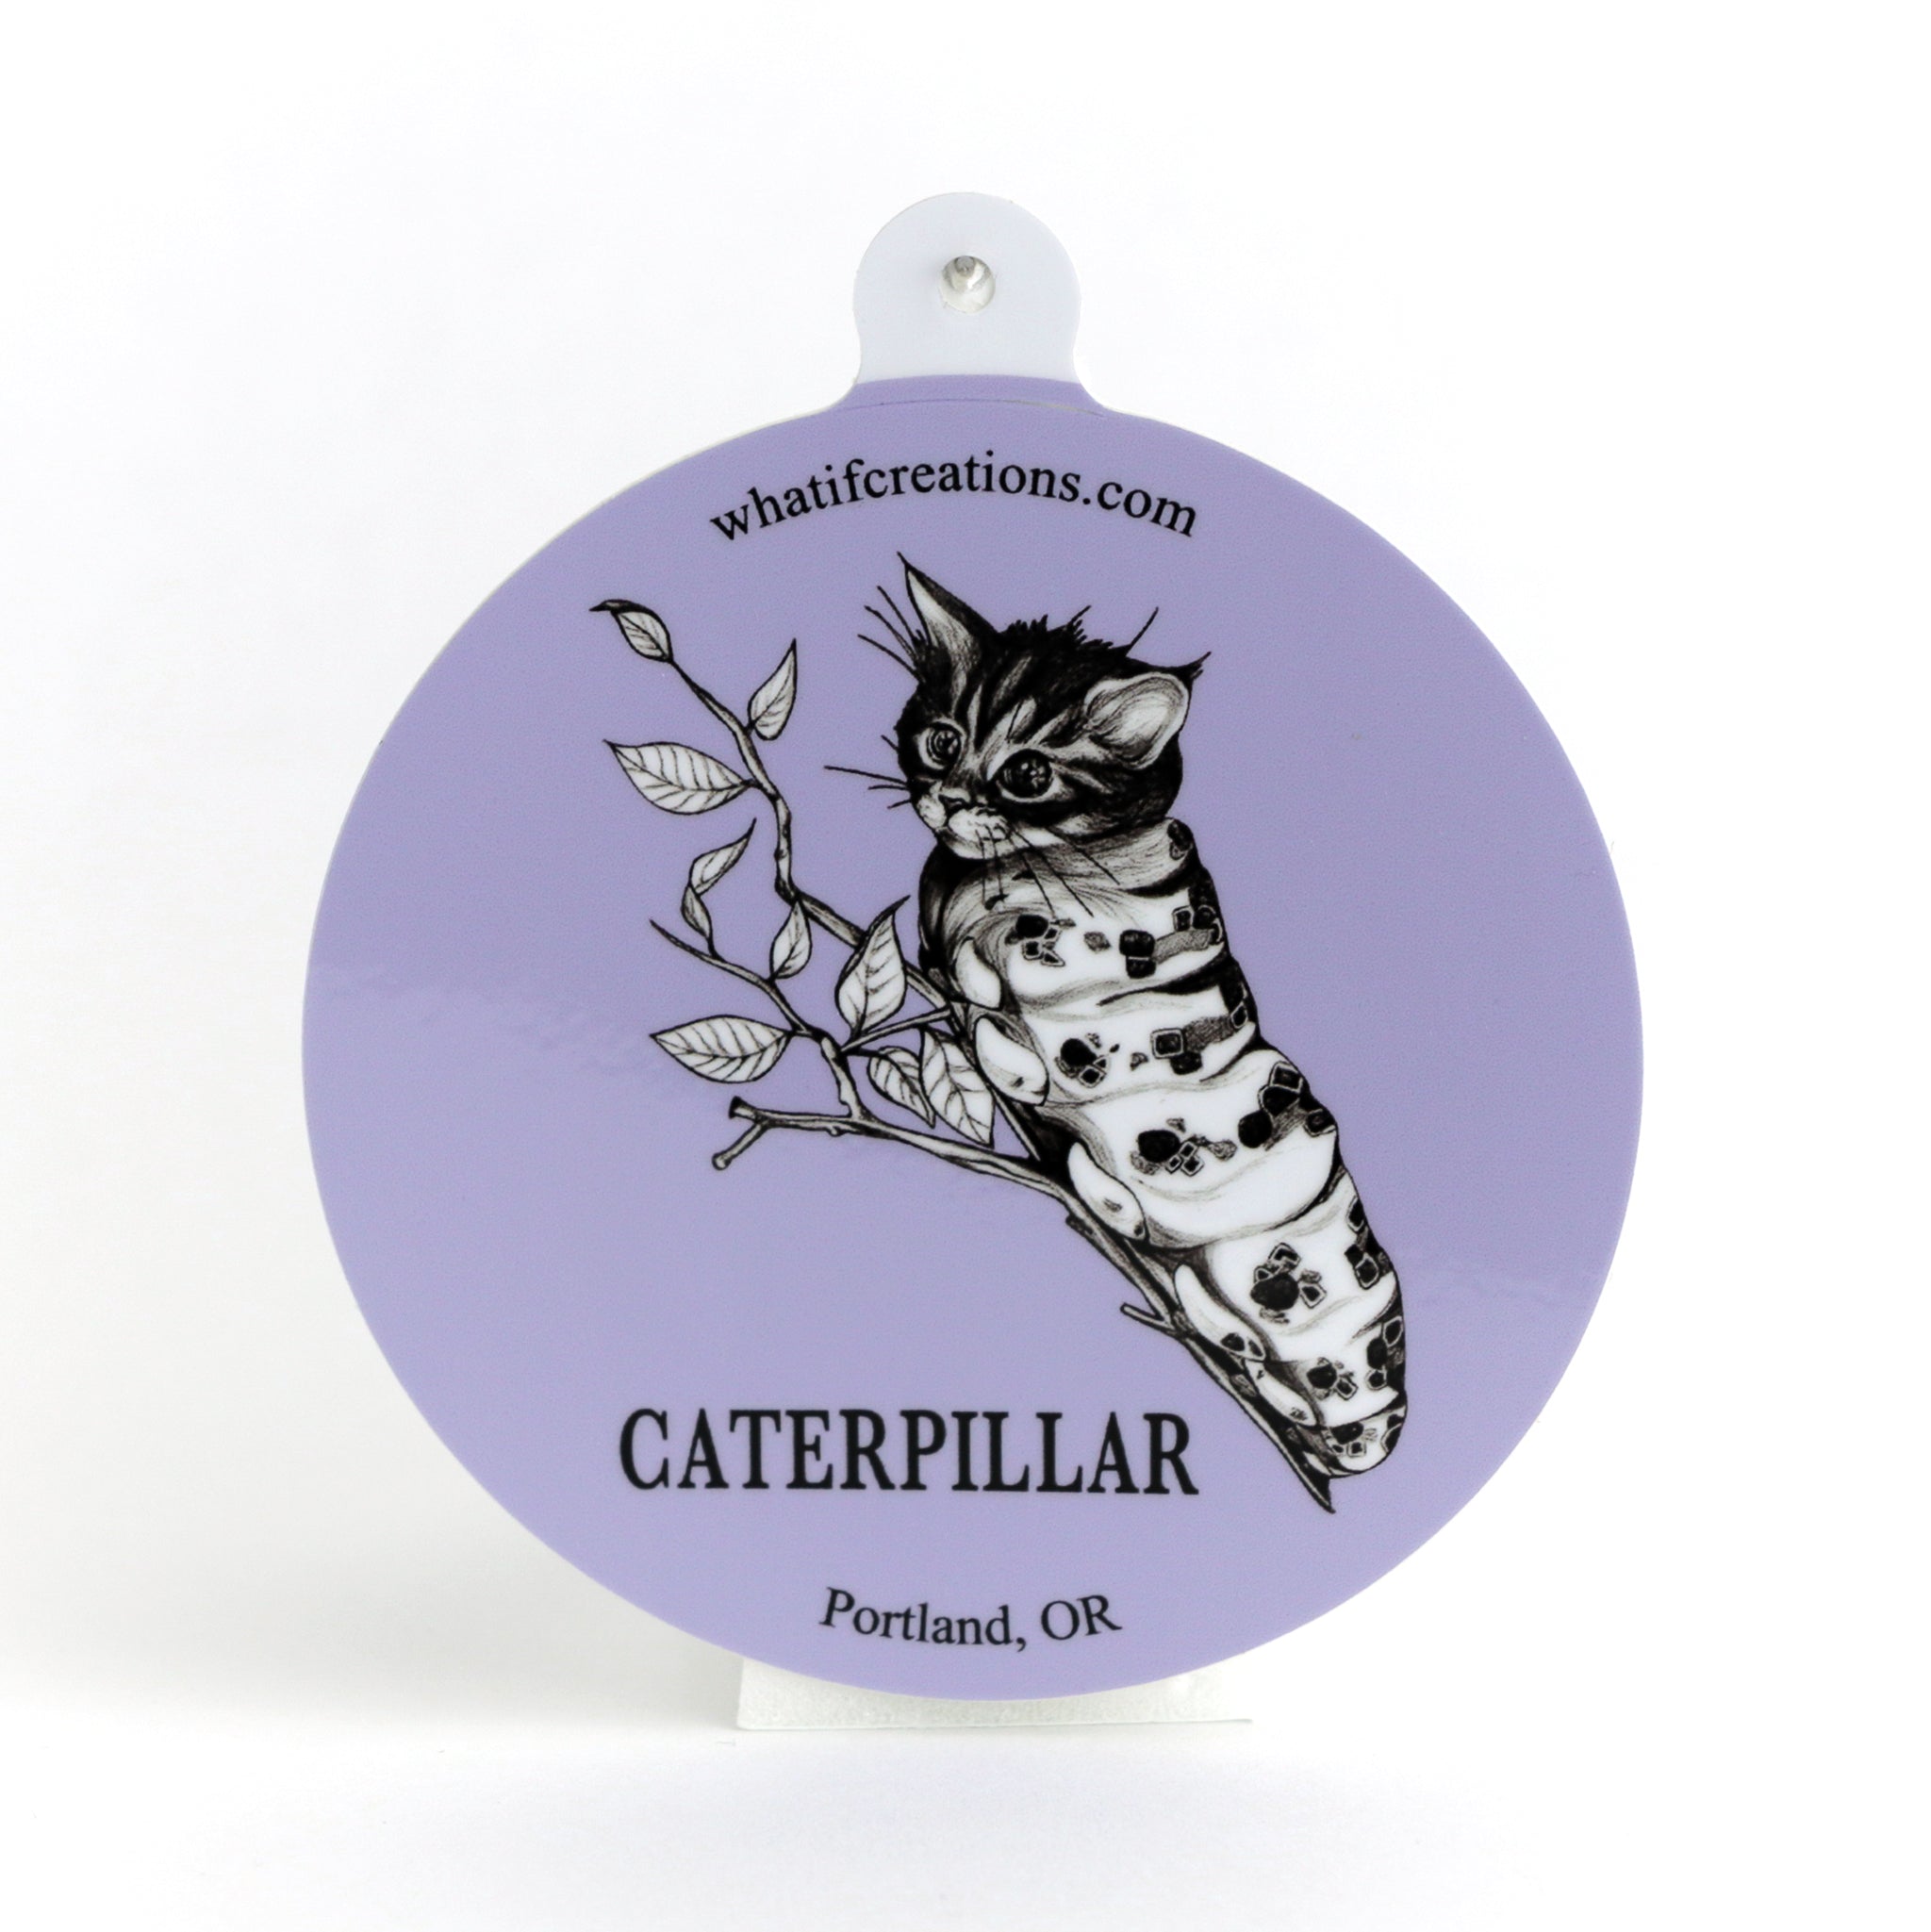 Caterpillar 3" Vinyl Sticker